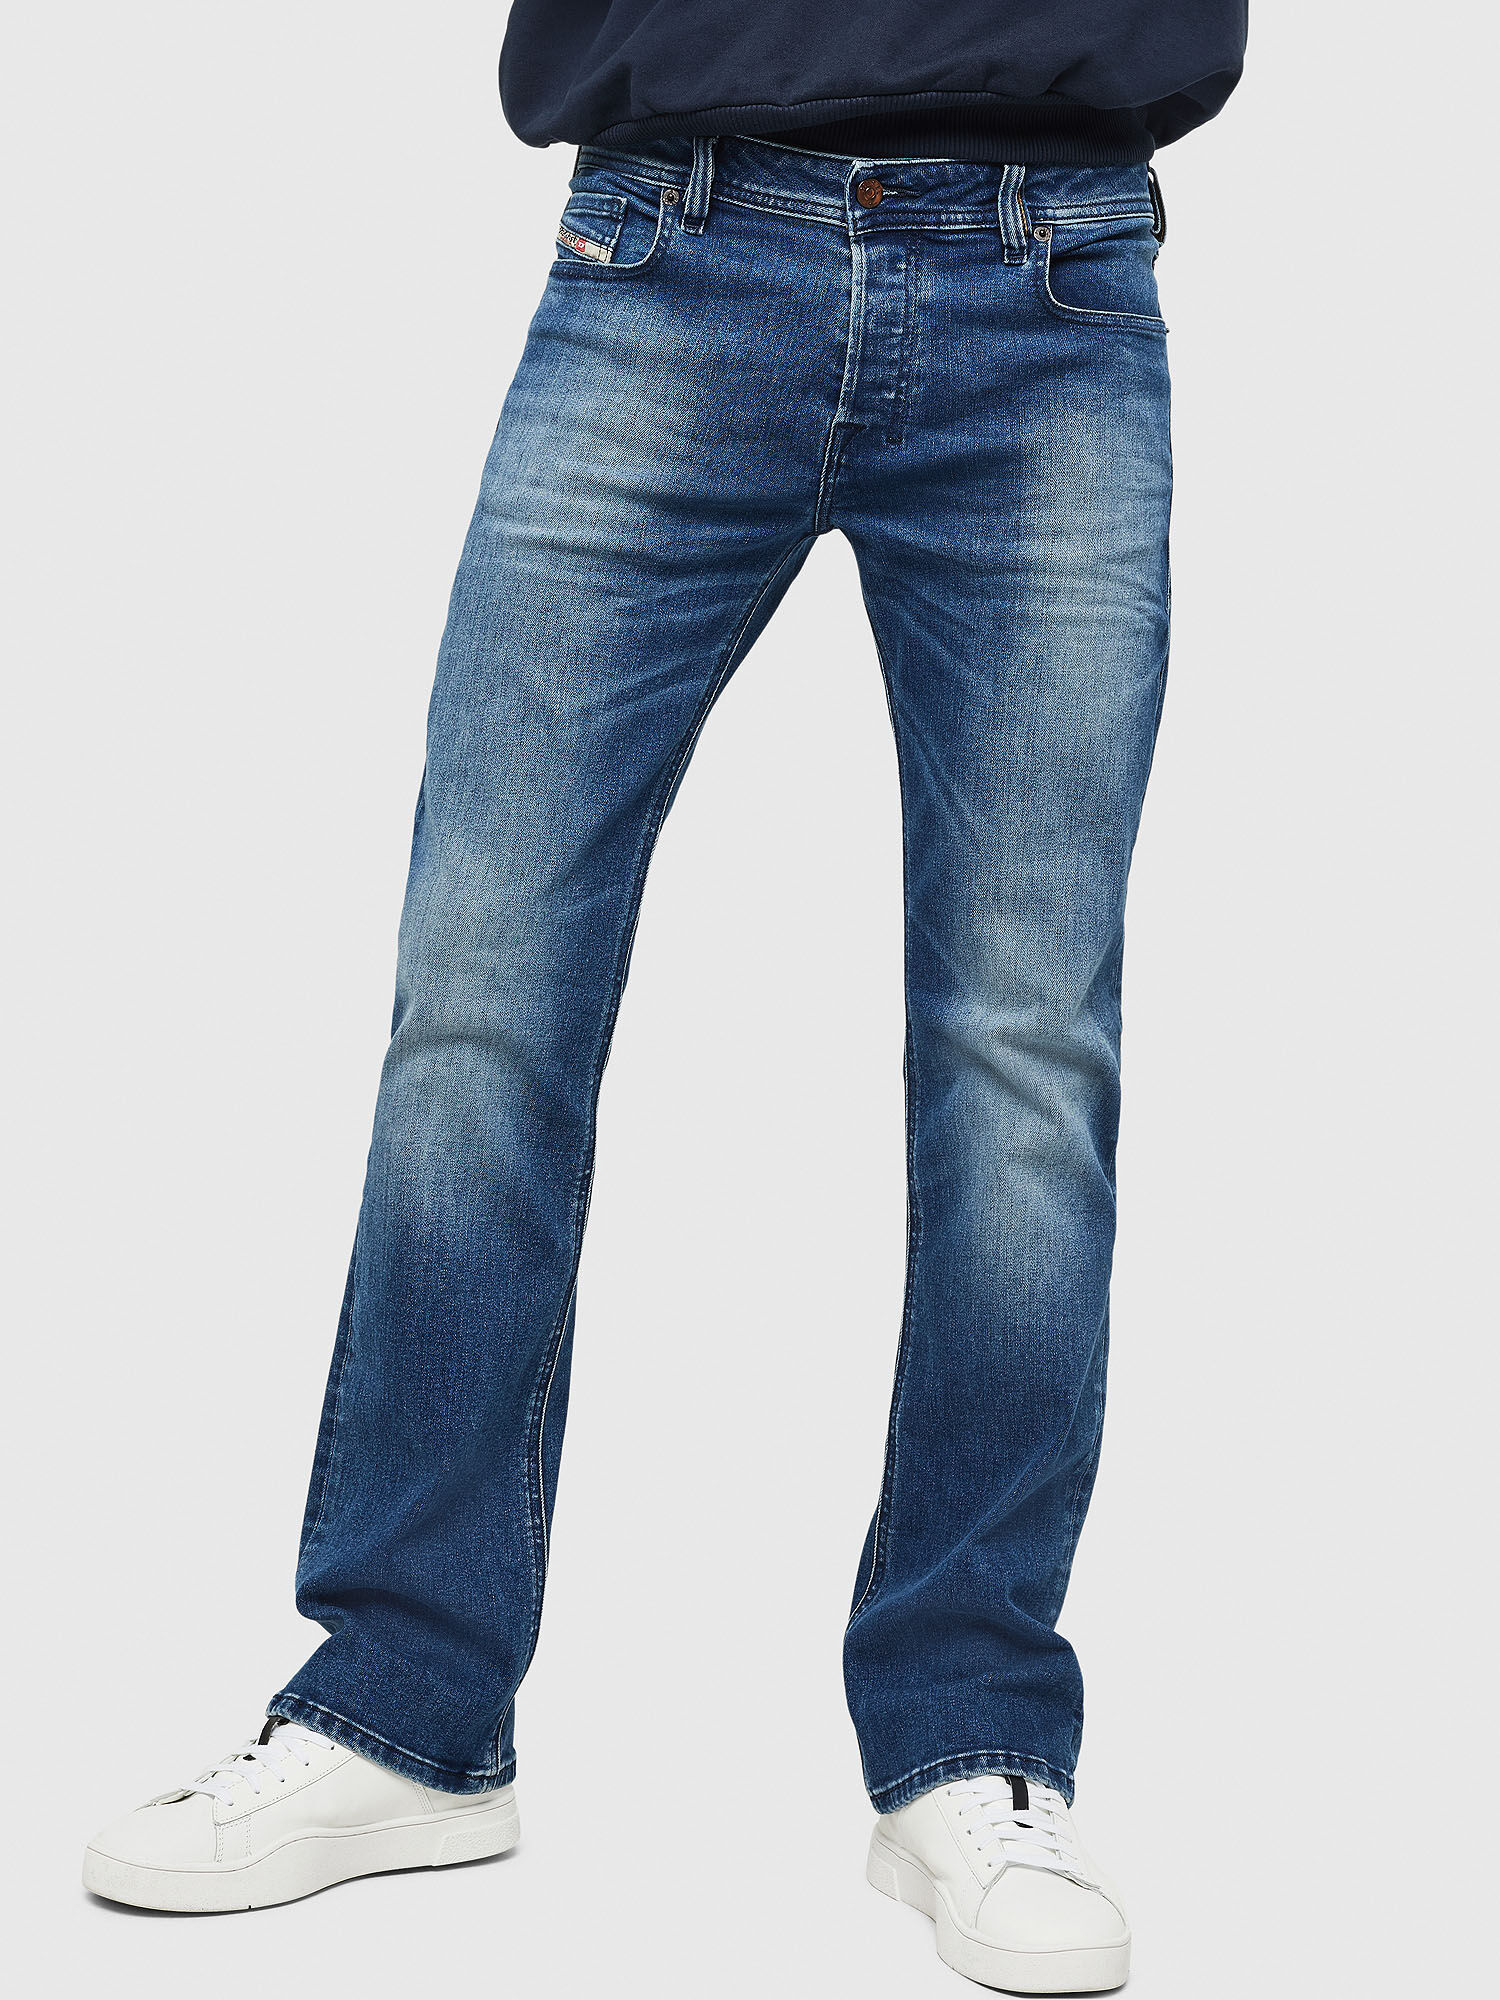 sequin cuff jeans